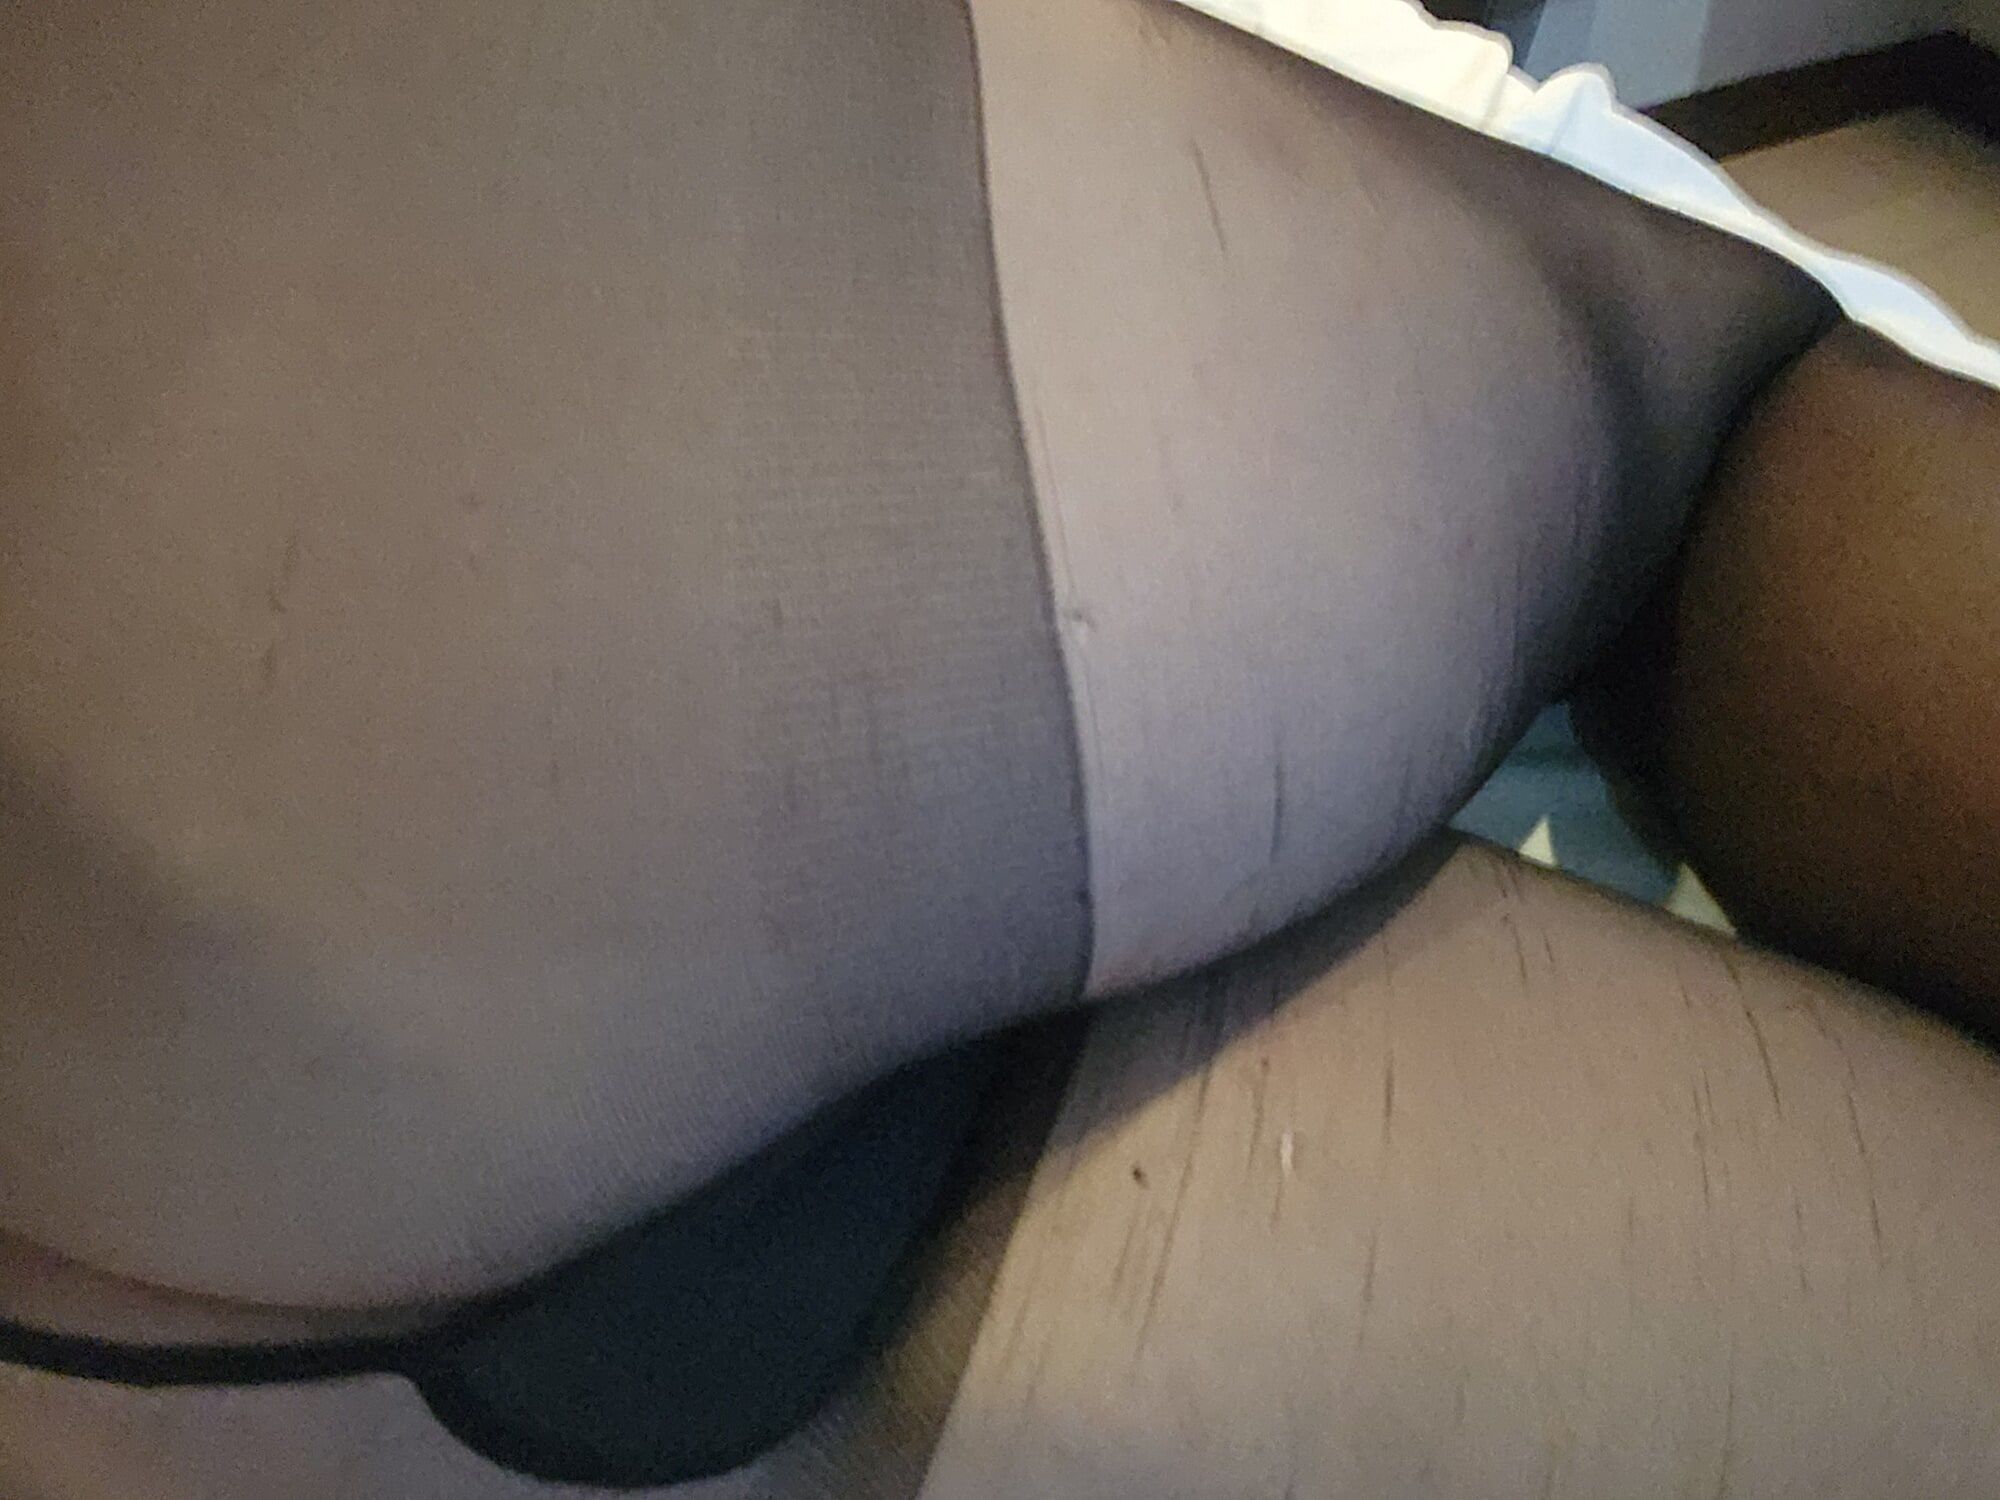 Wearing my sexy stockings #11